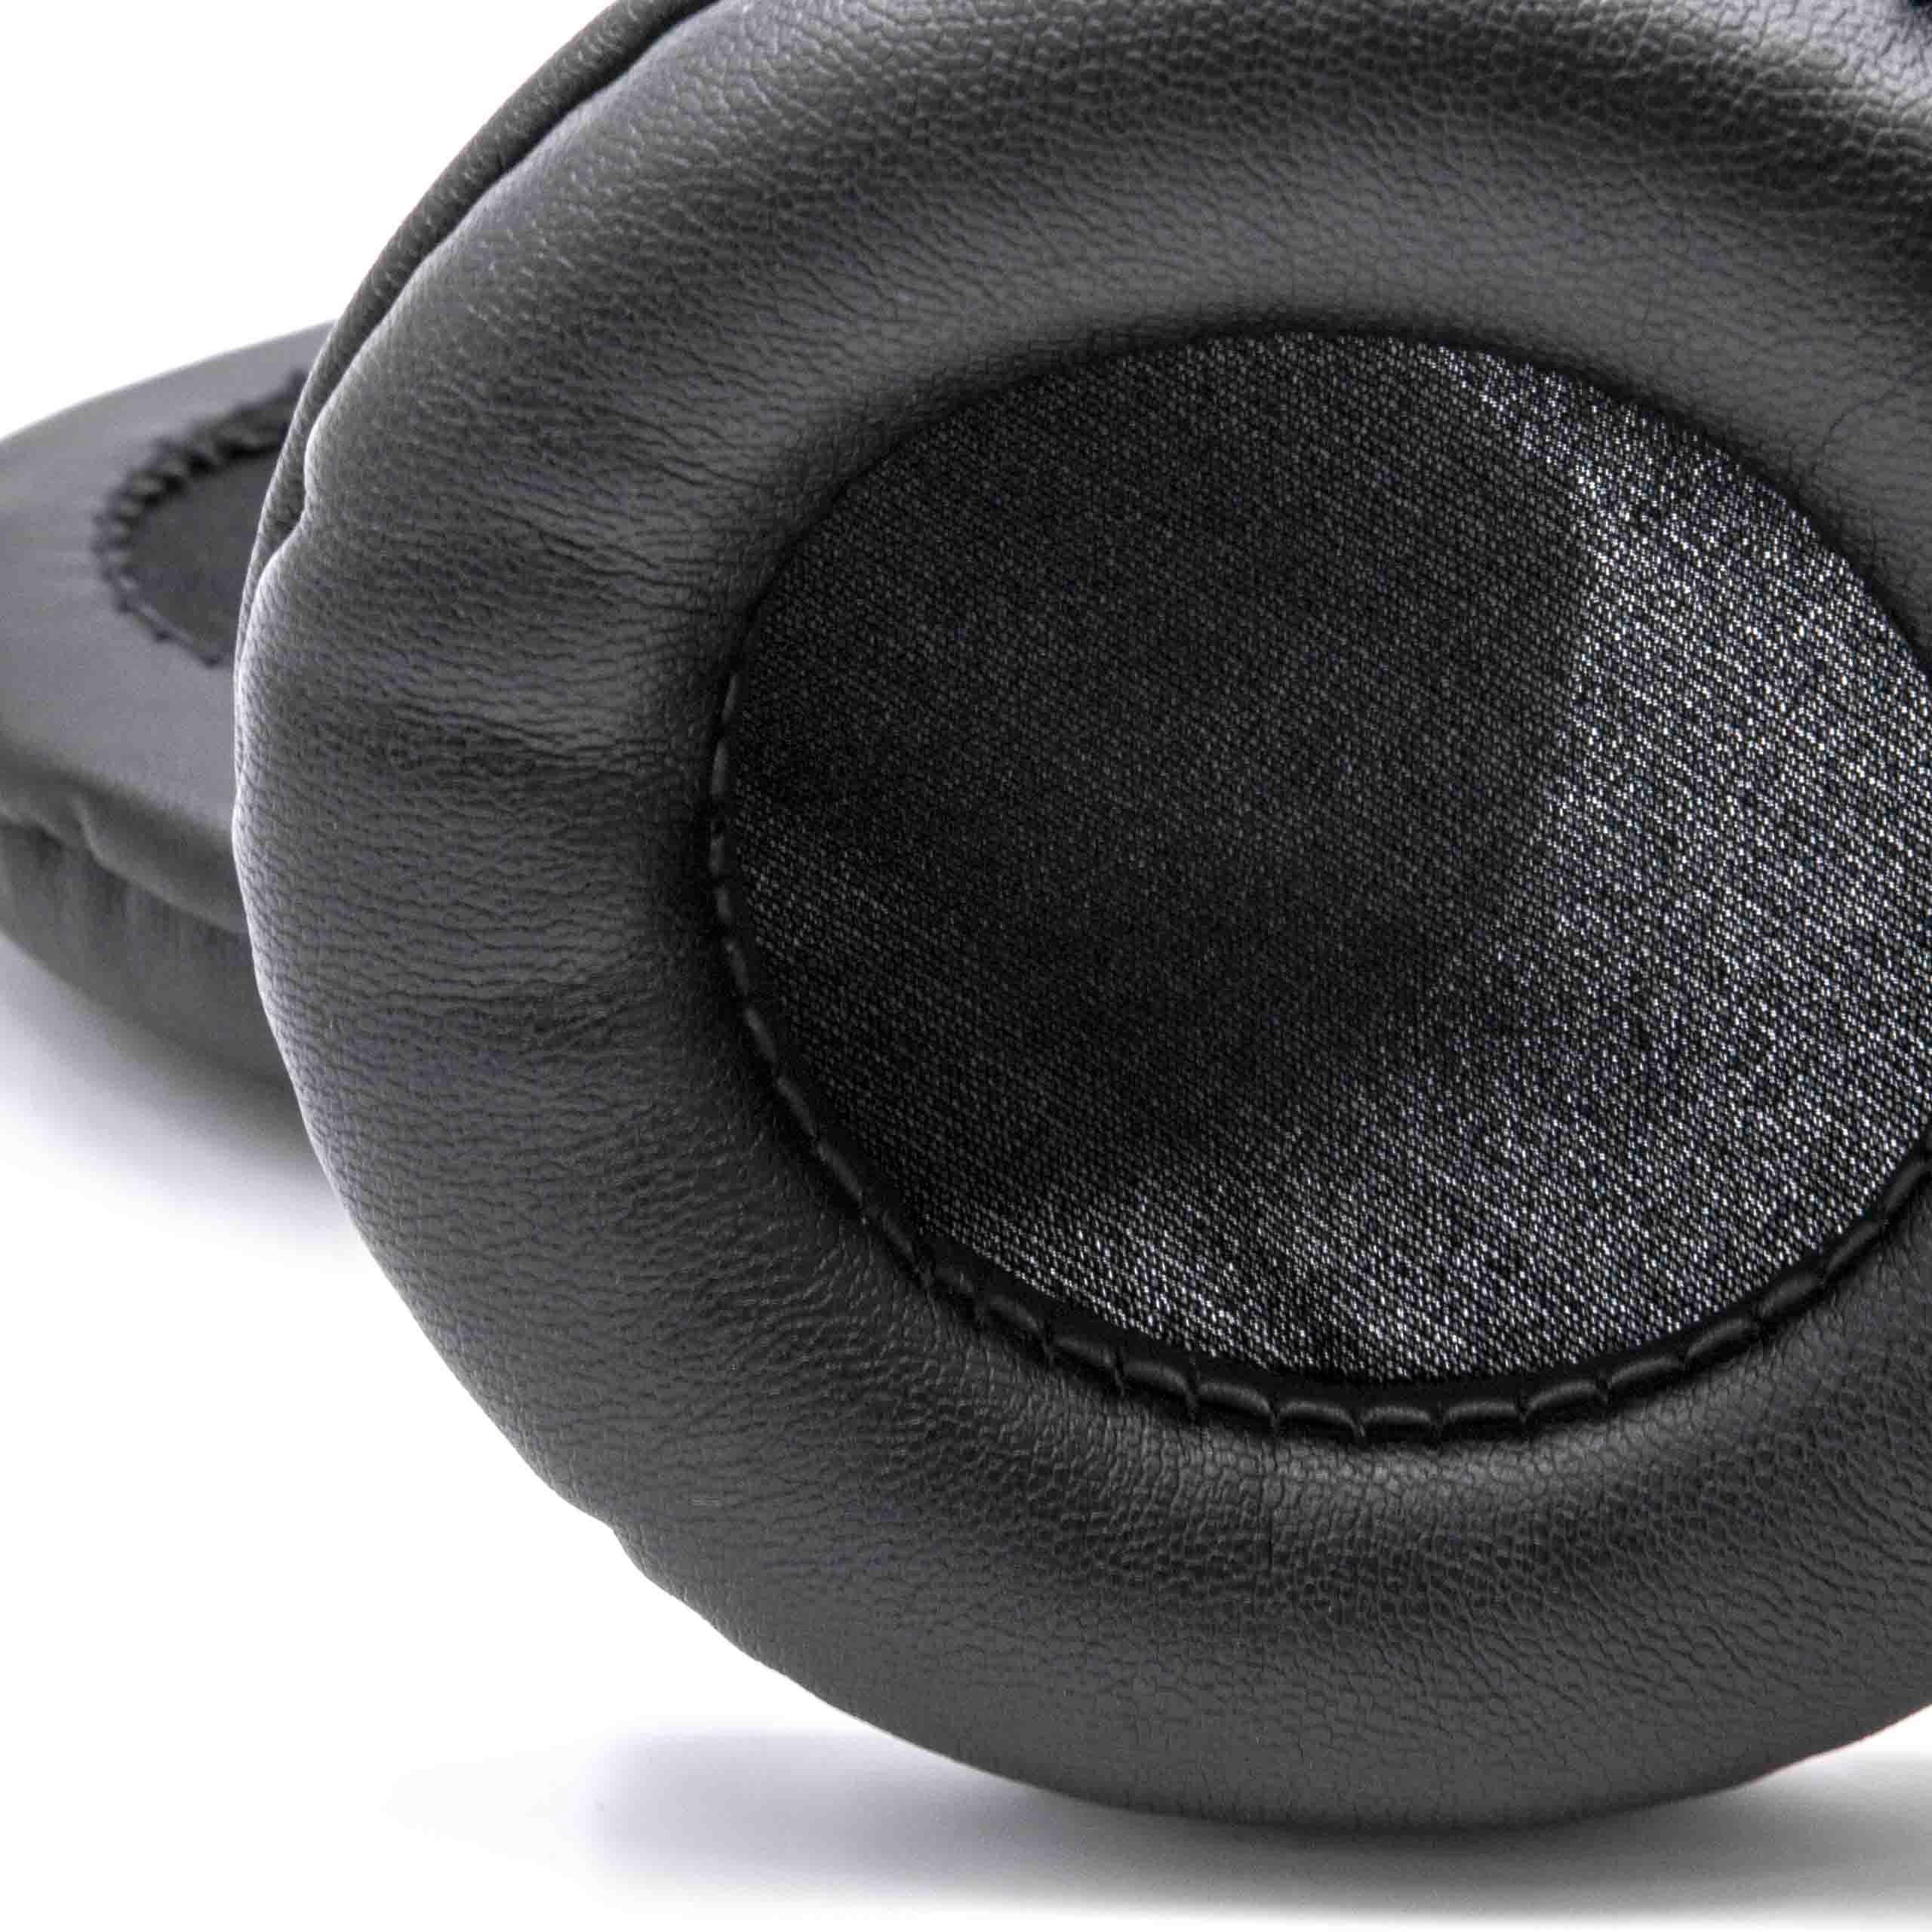 benötigen für Kopfhörer passend Ohrpolster 95mm vhbw Kopfhörer, die Ohrpolster